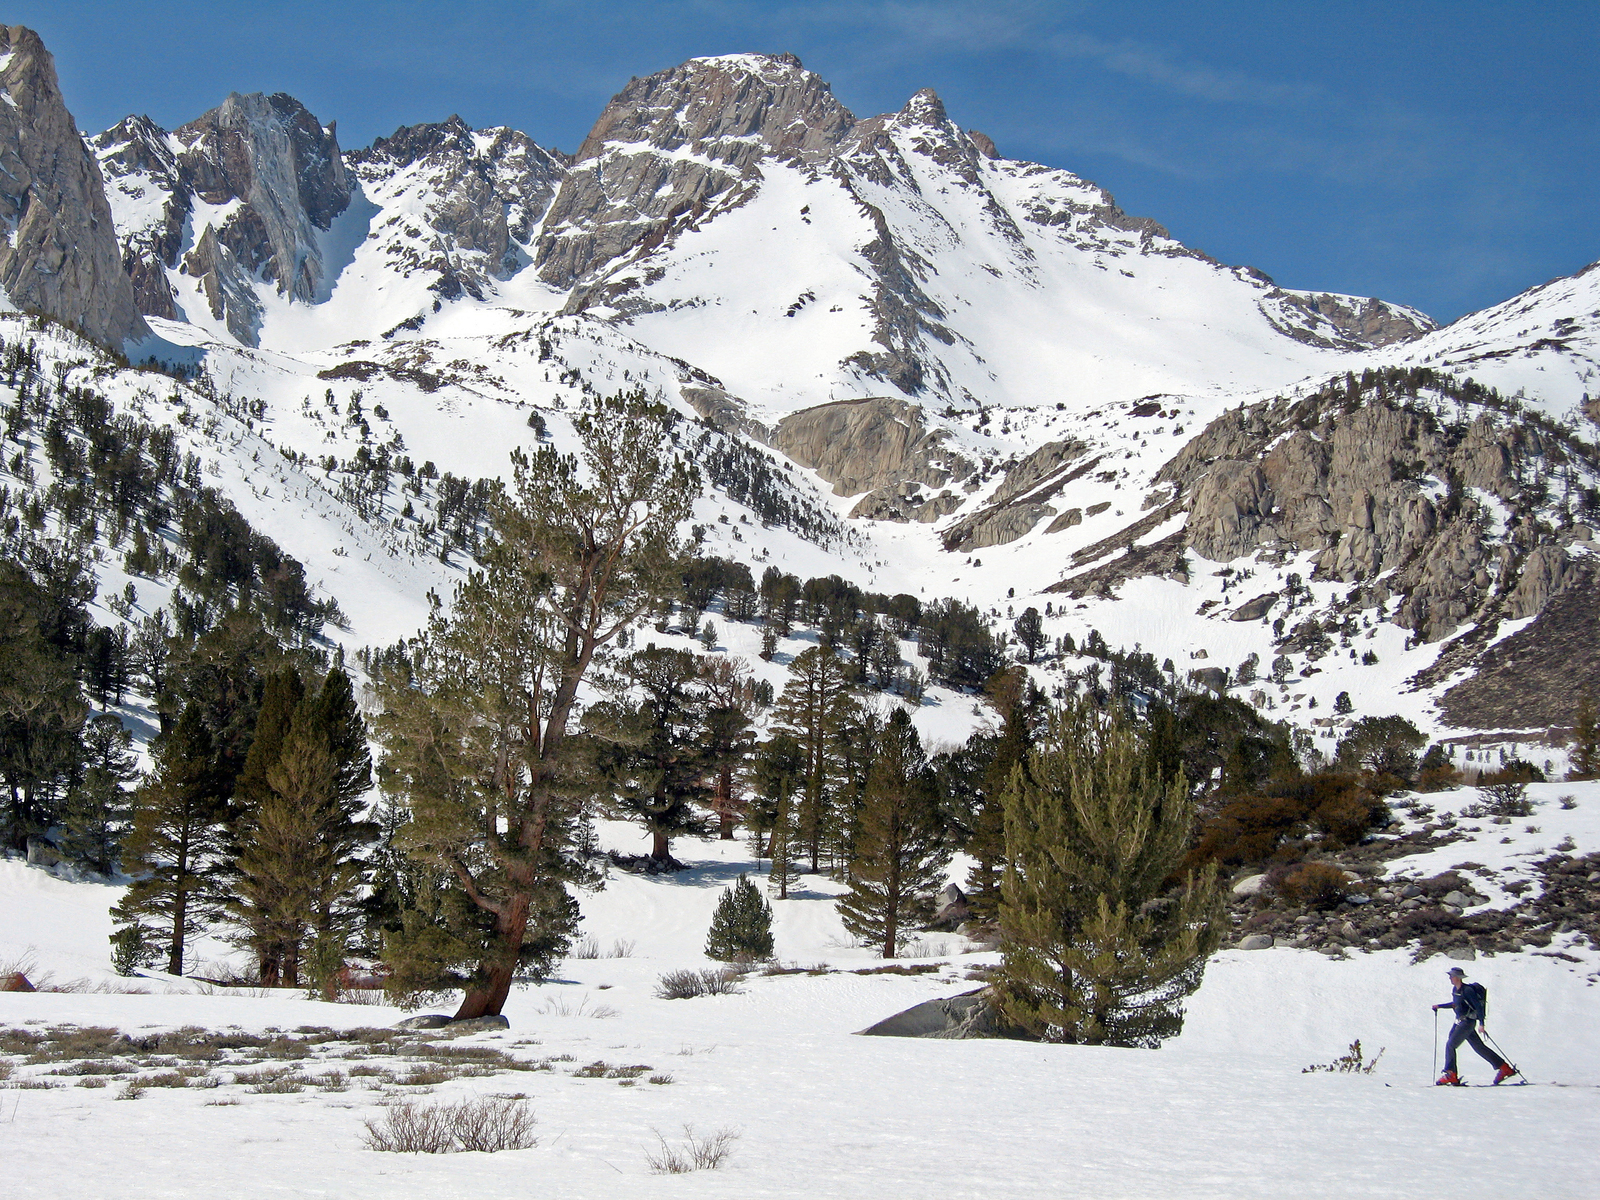 backcountry skiing in the eastern Sierra, California